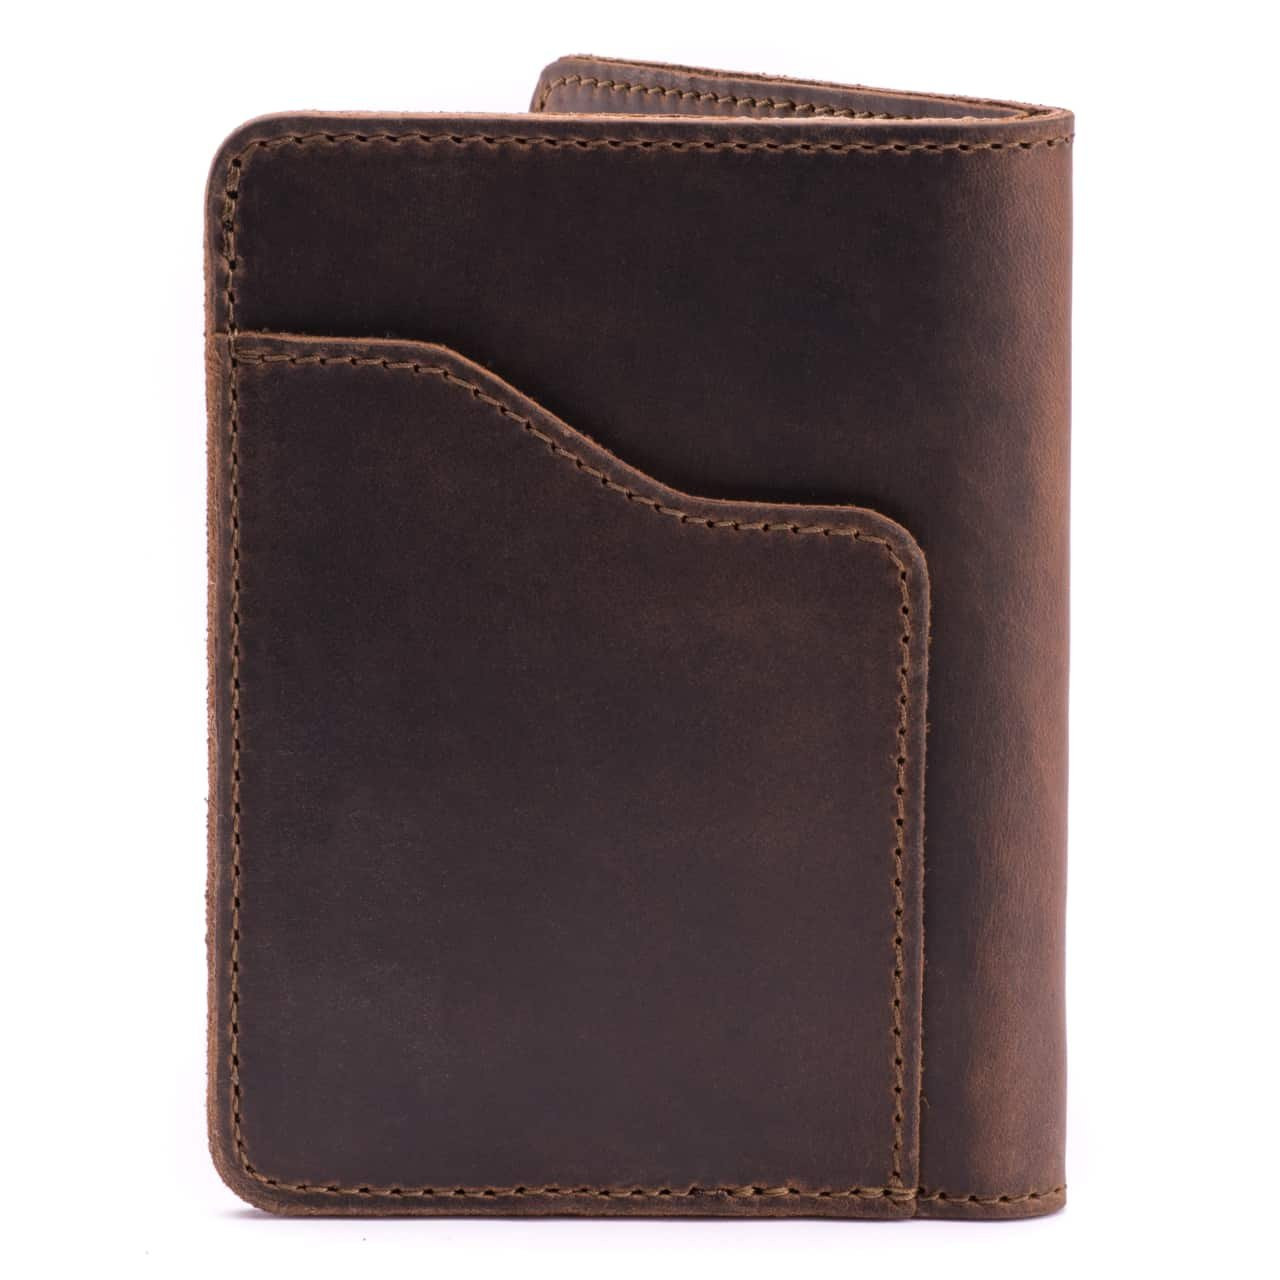 Passport Holder - Black Classic leather